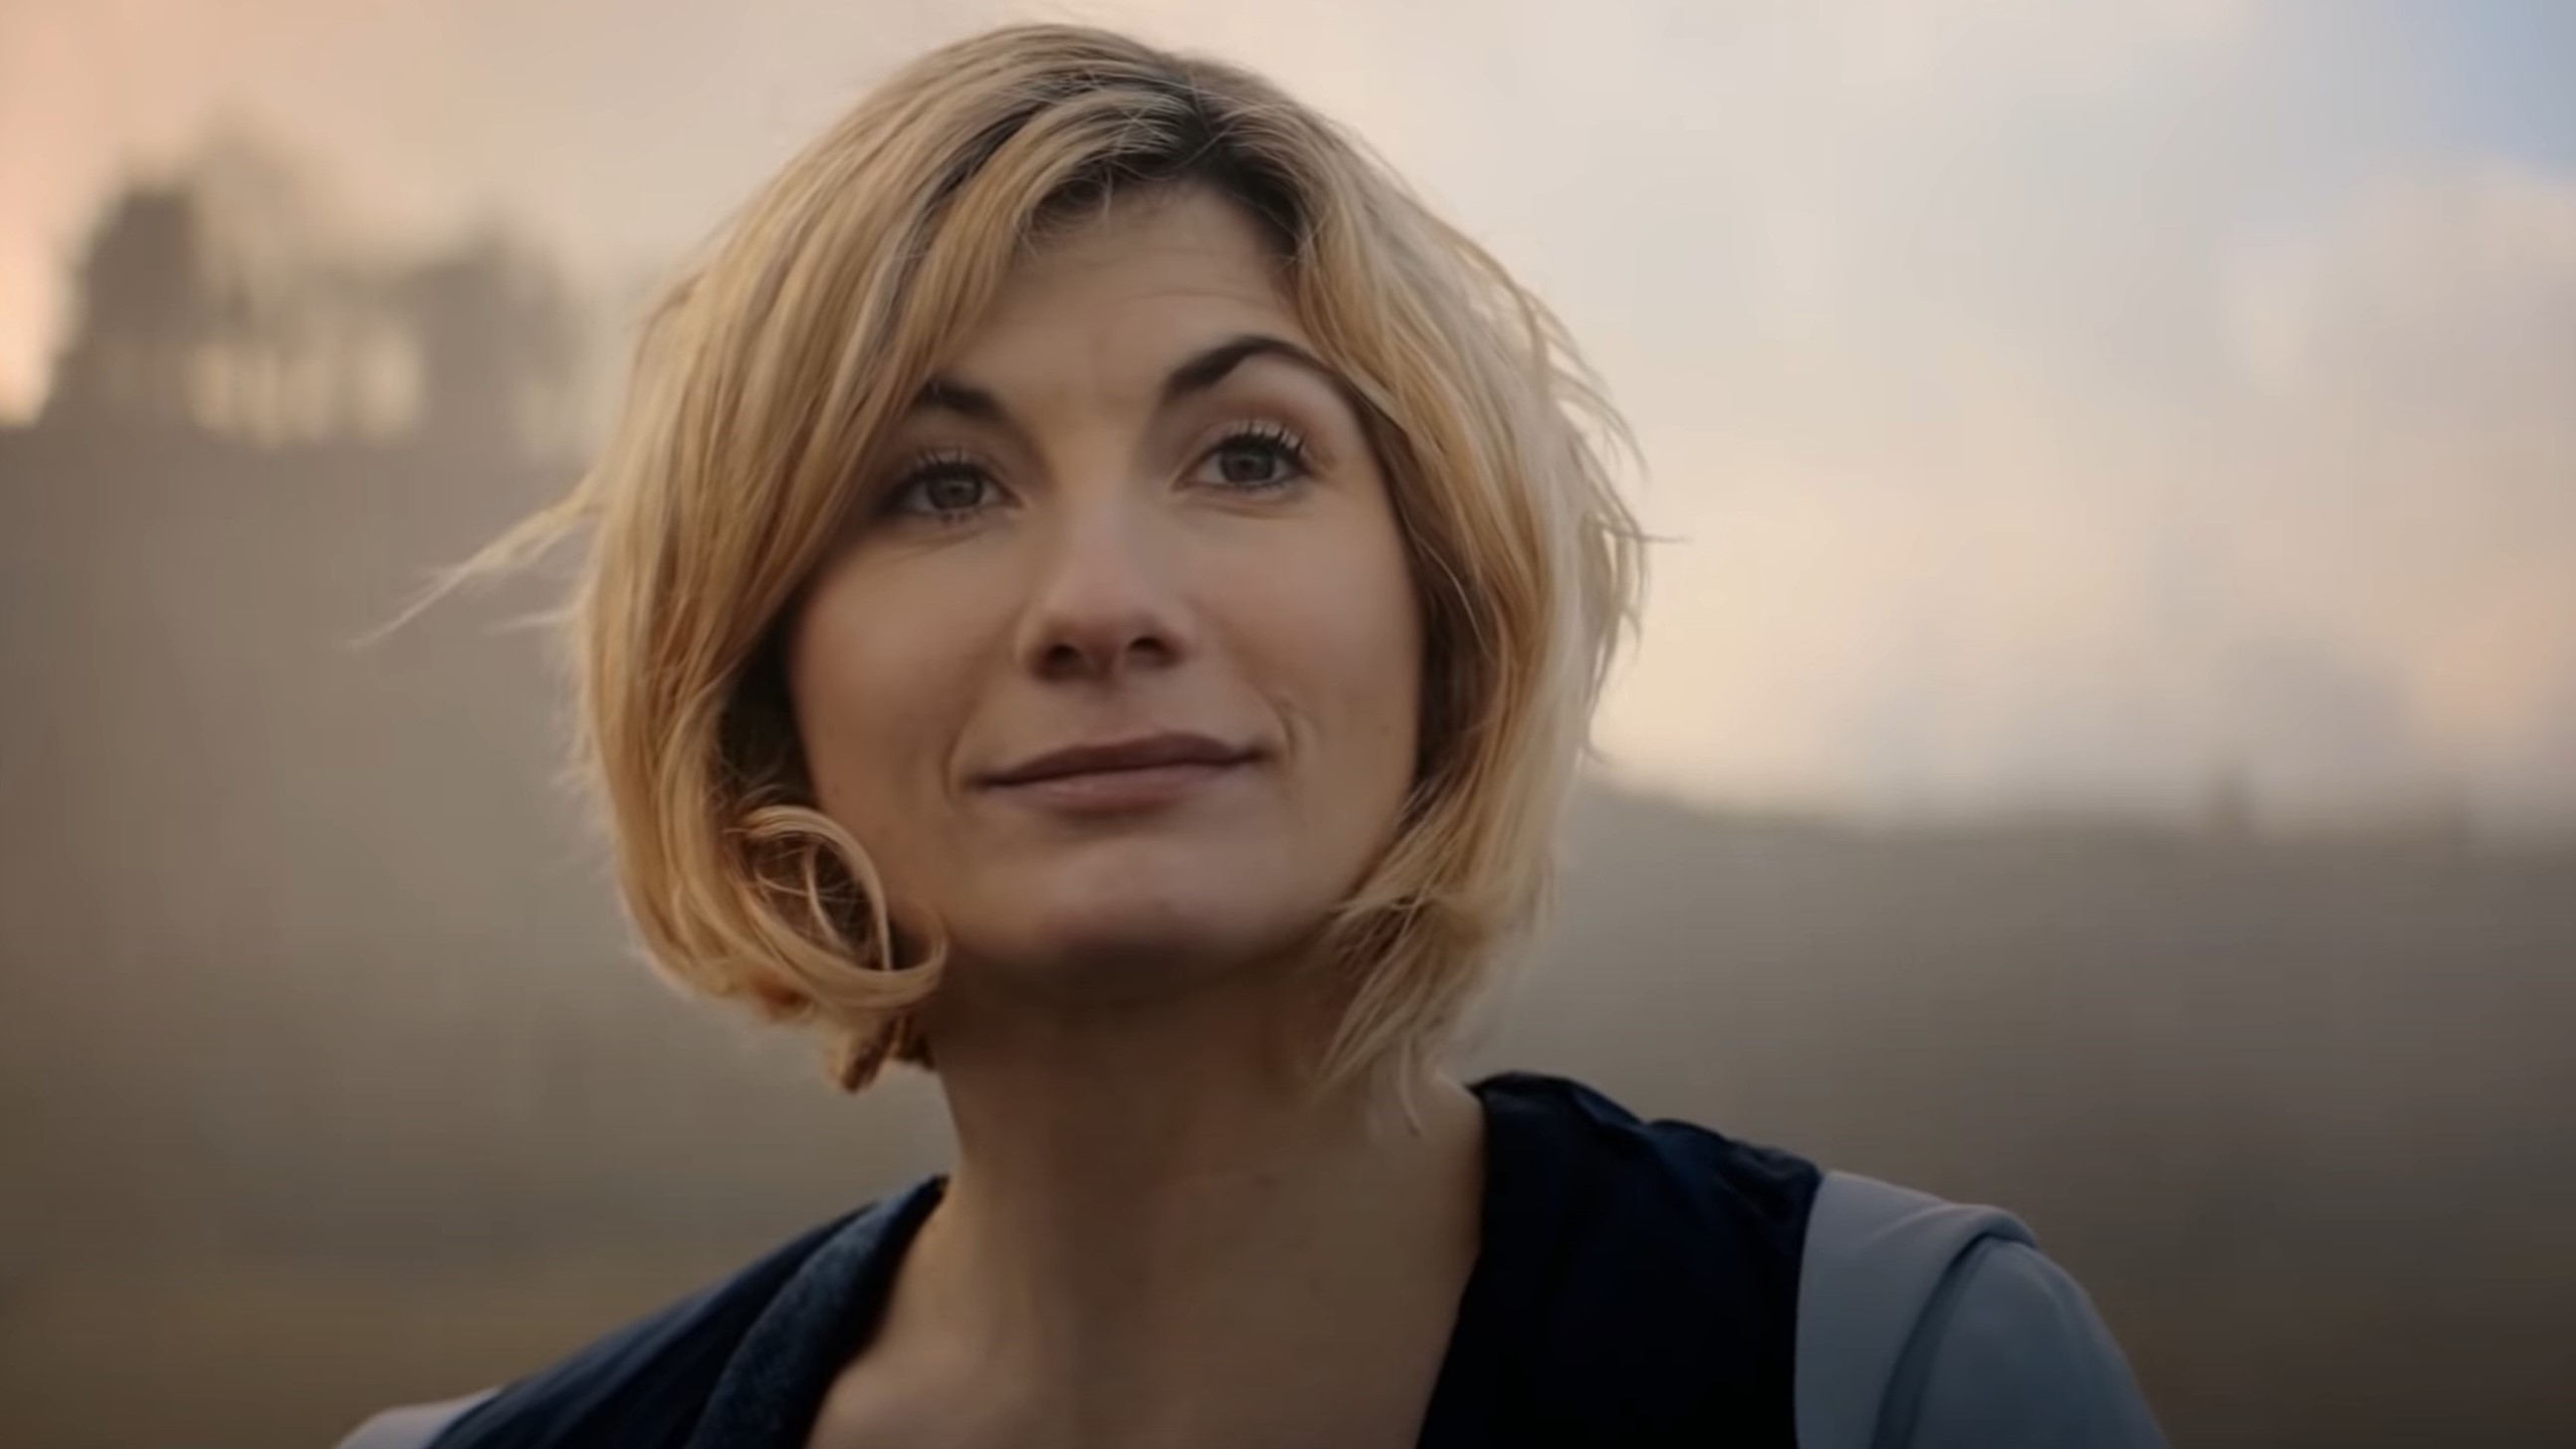 Doctor Who season 13 trailer, episodes, Jodie Whittaker departure